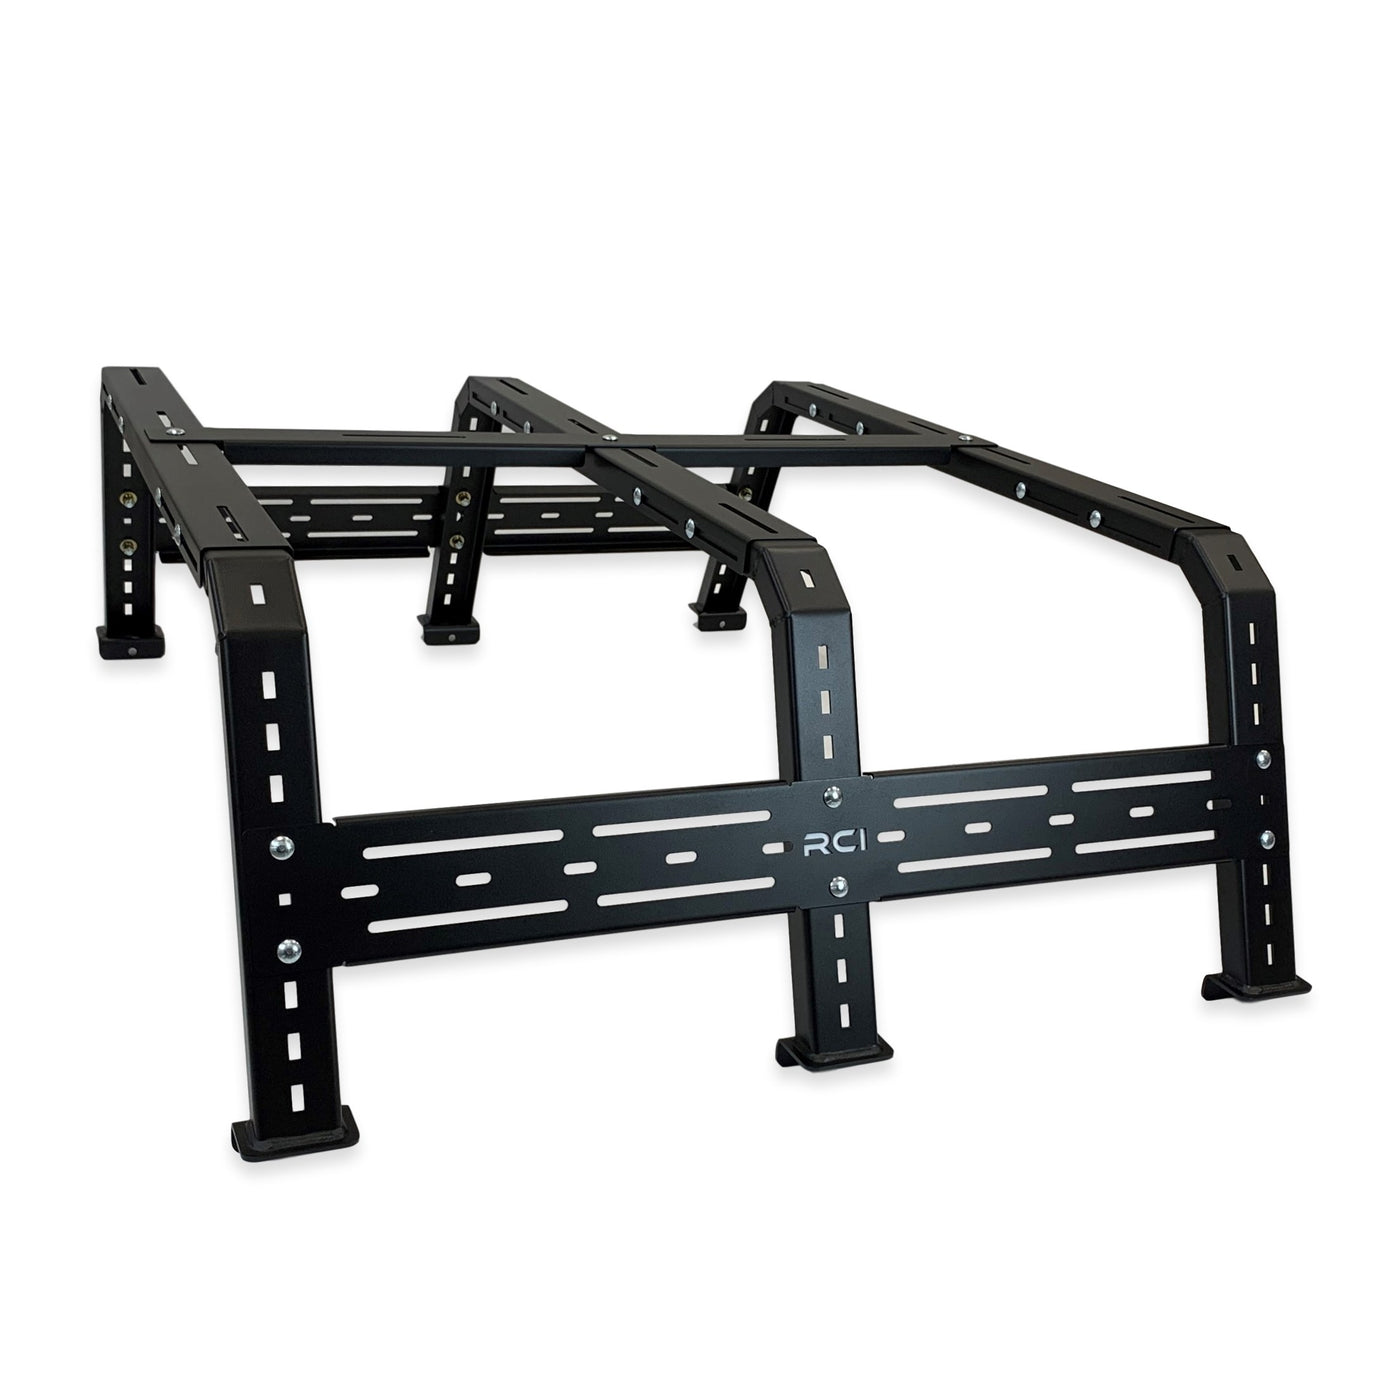 RCI Offroad Universal 18" Adjustable Bed Rack - Steel